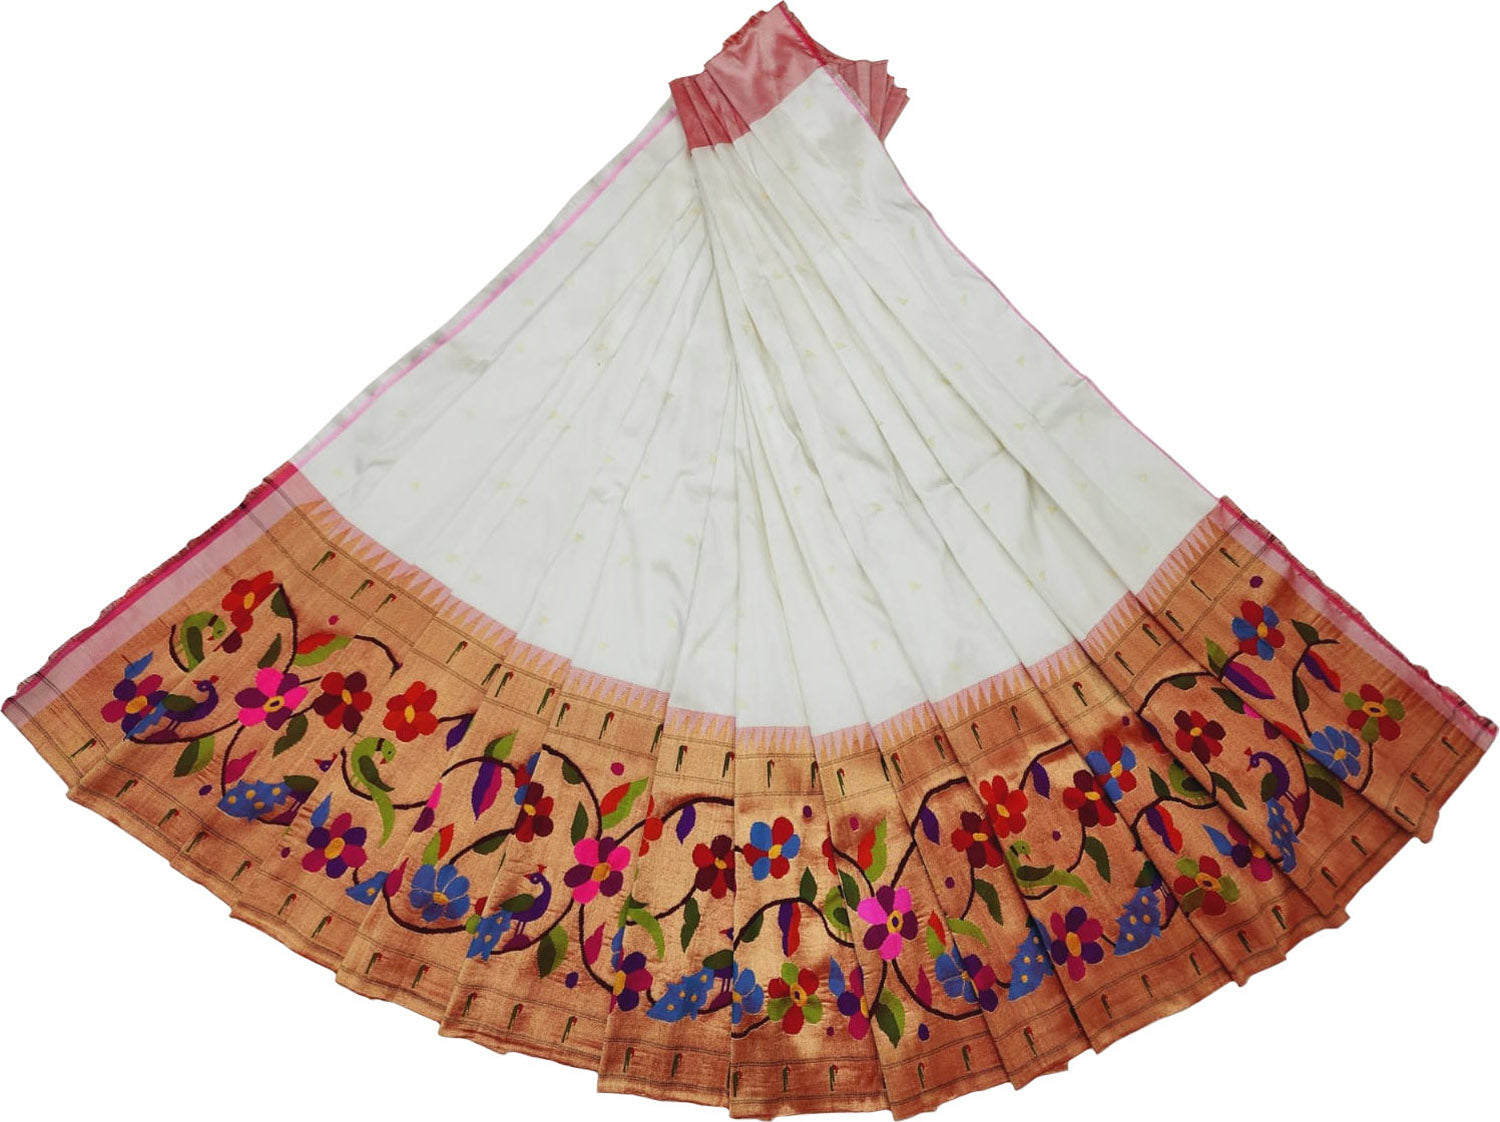 Off White Paithani Handloom Pure Silk Lehenga Fabric